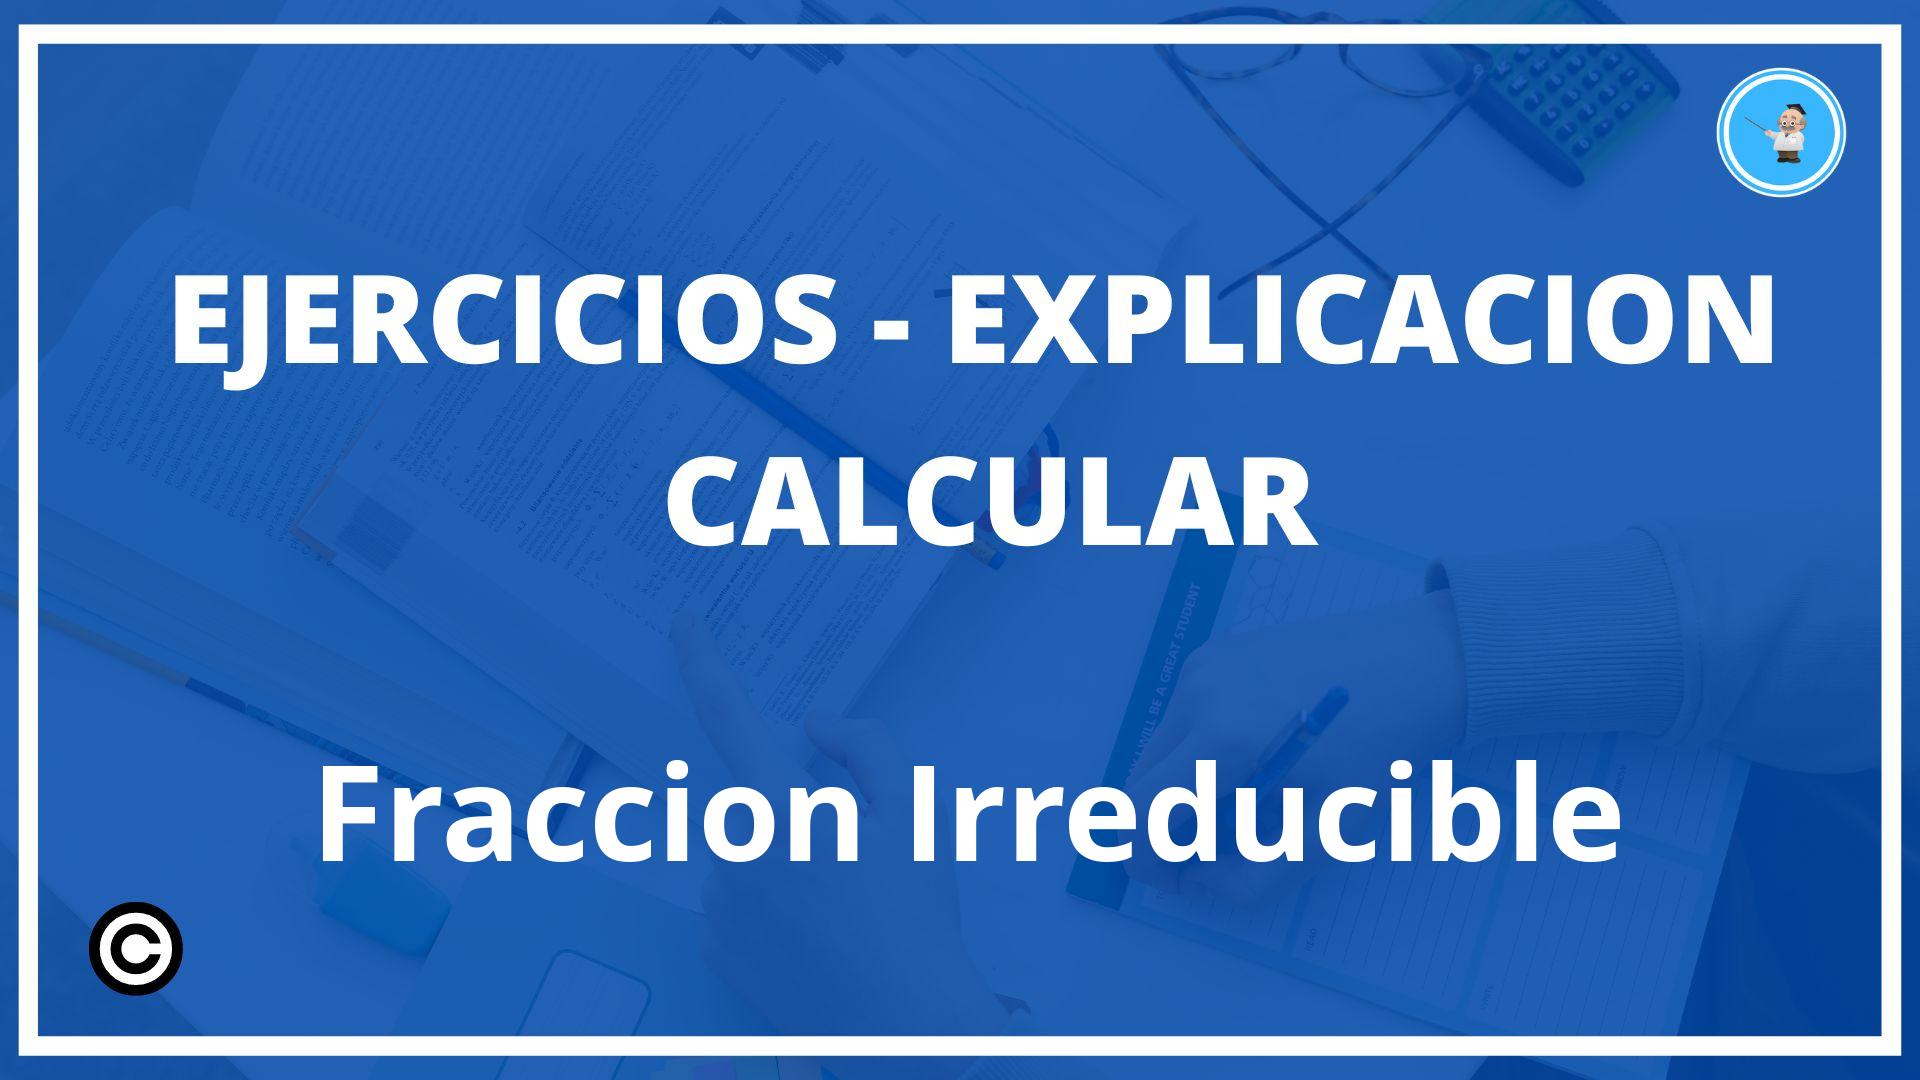 Ejercicios Calcular Fraccion Irreducible PDF